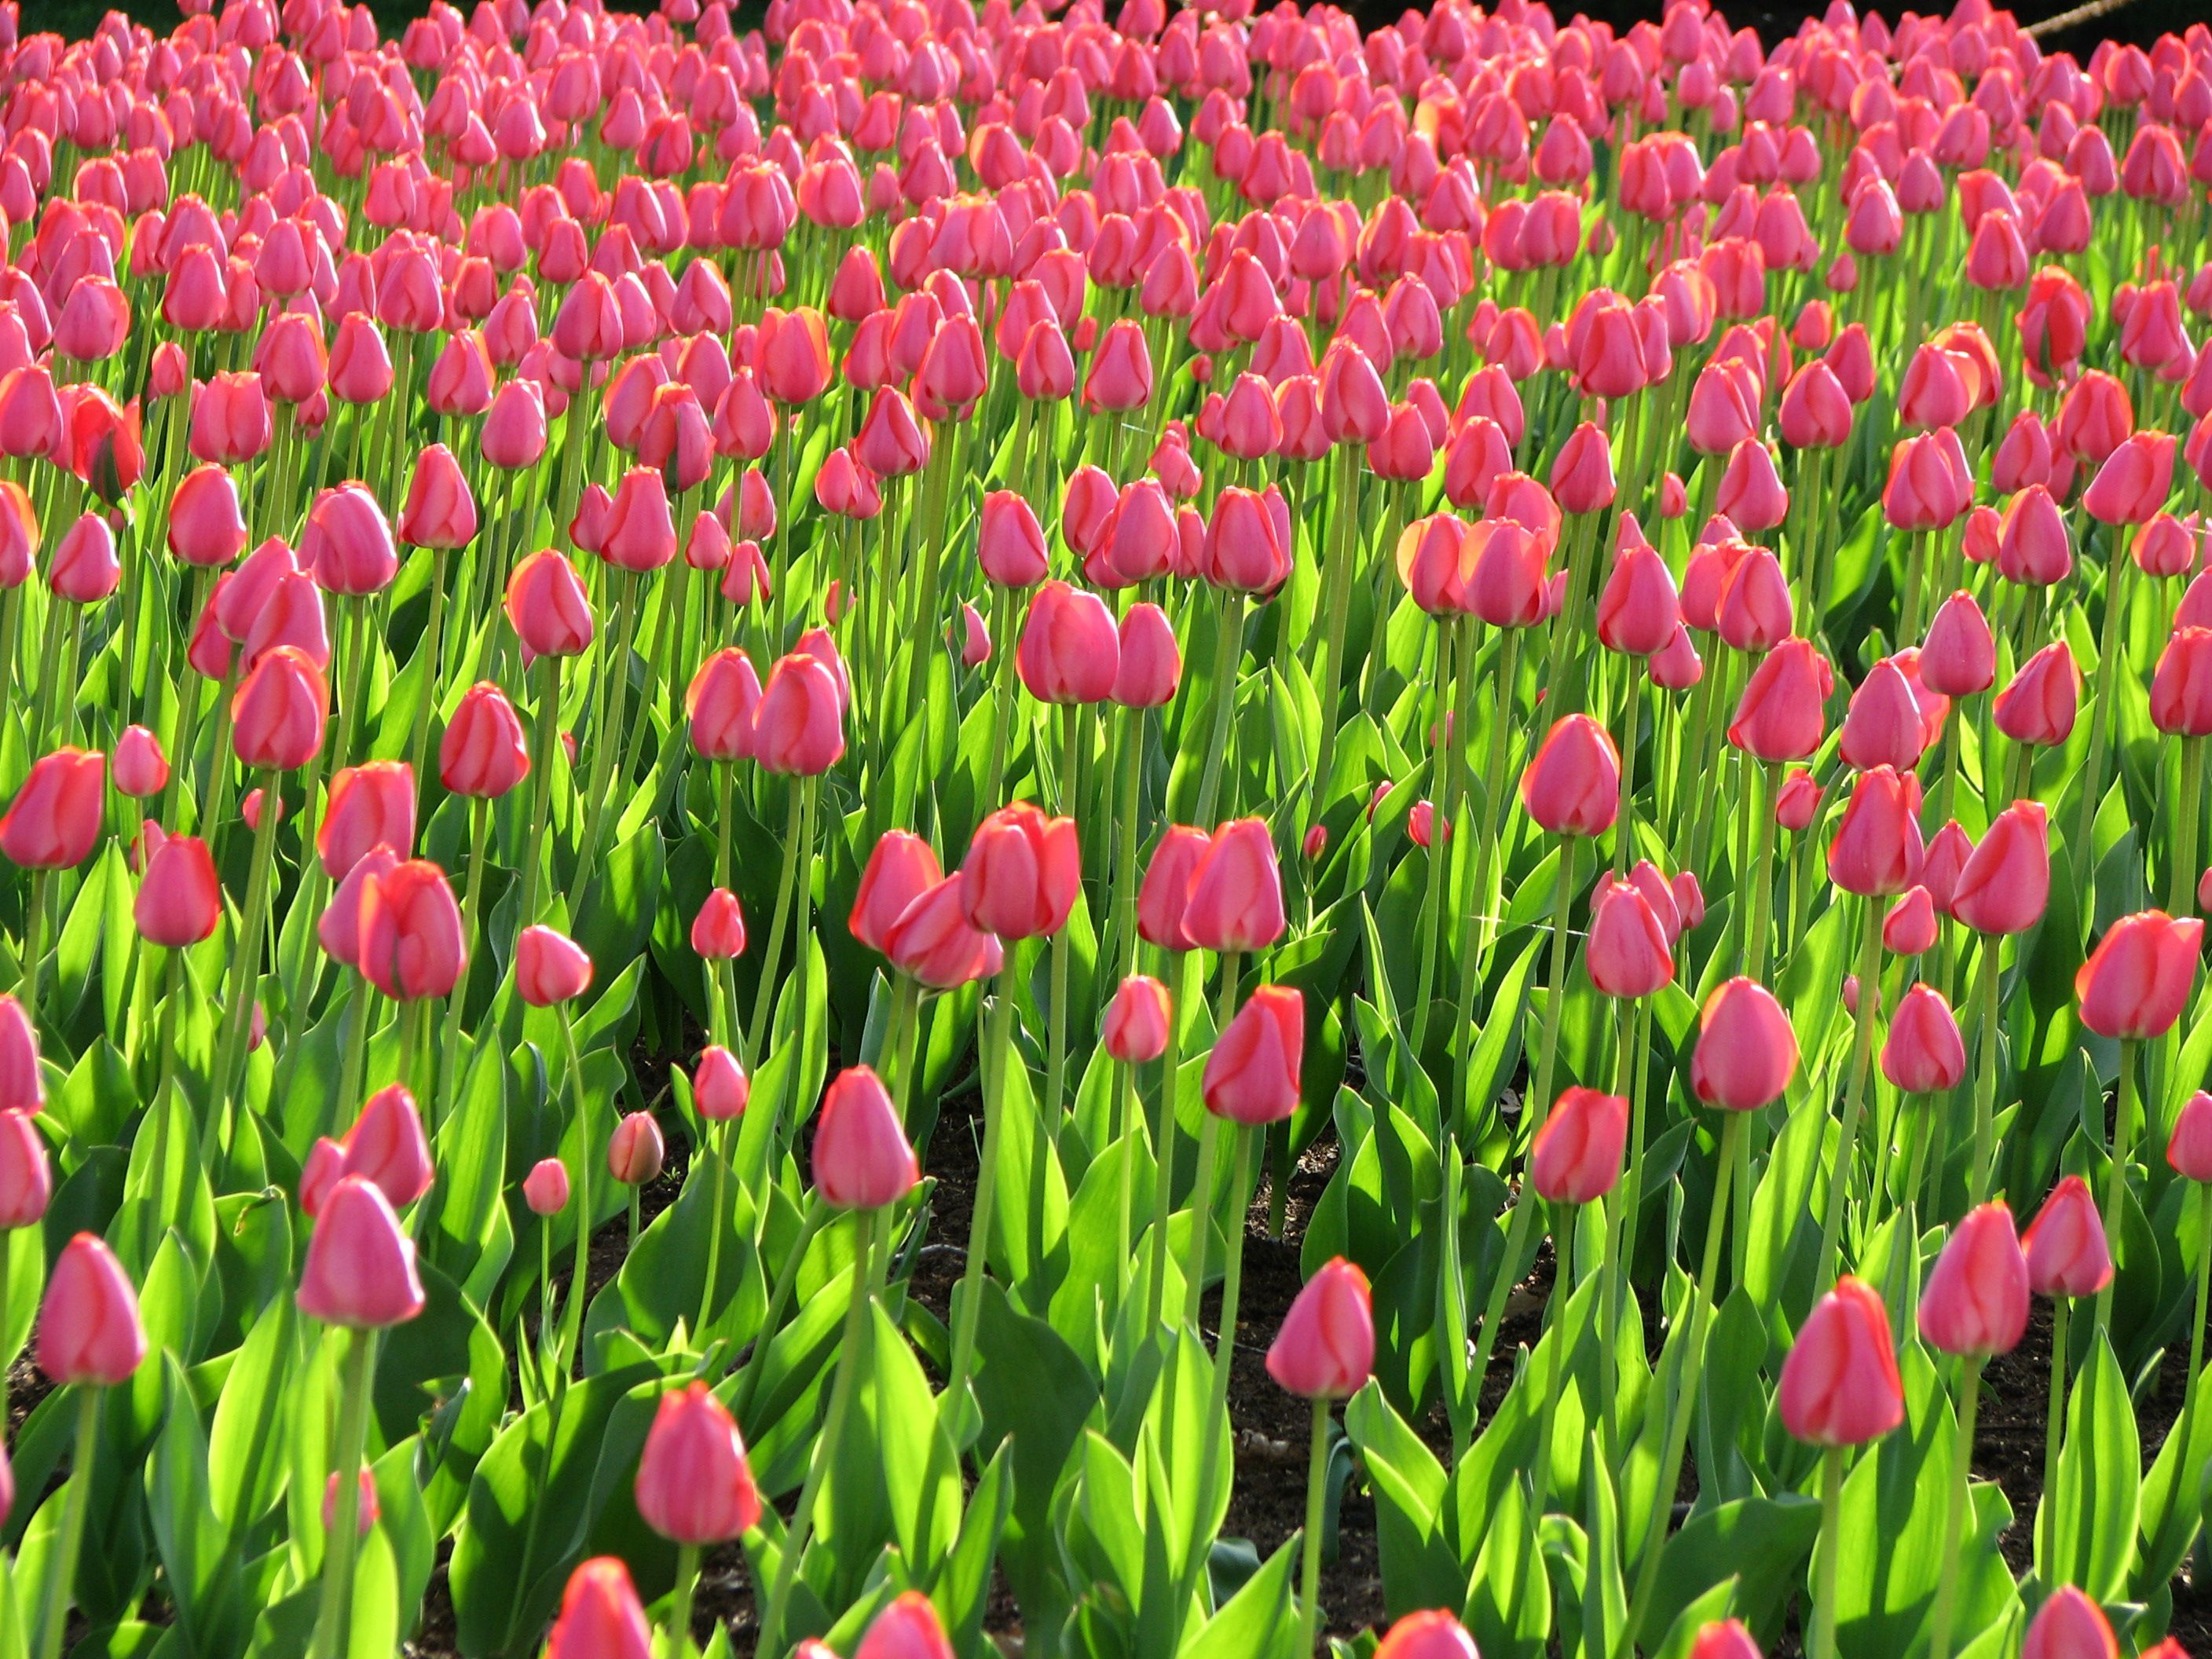 File:Pink tulips field.jpg - Wikimedia Commons